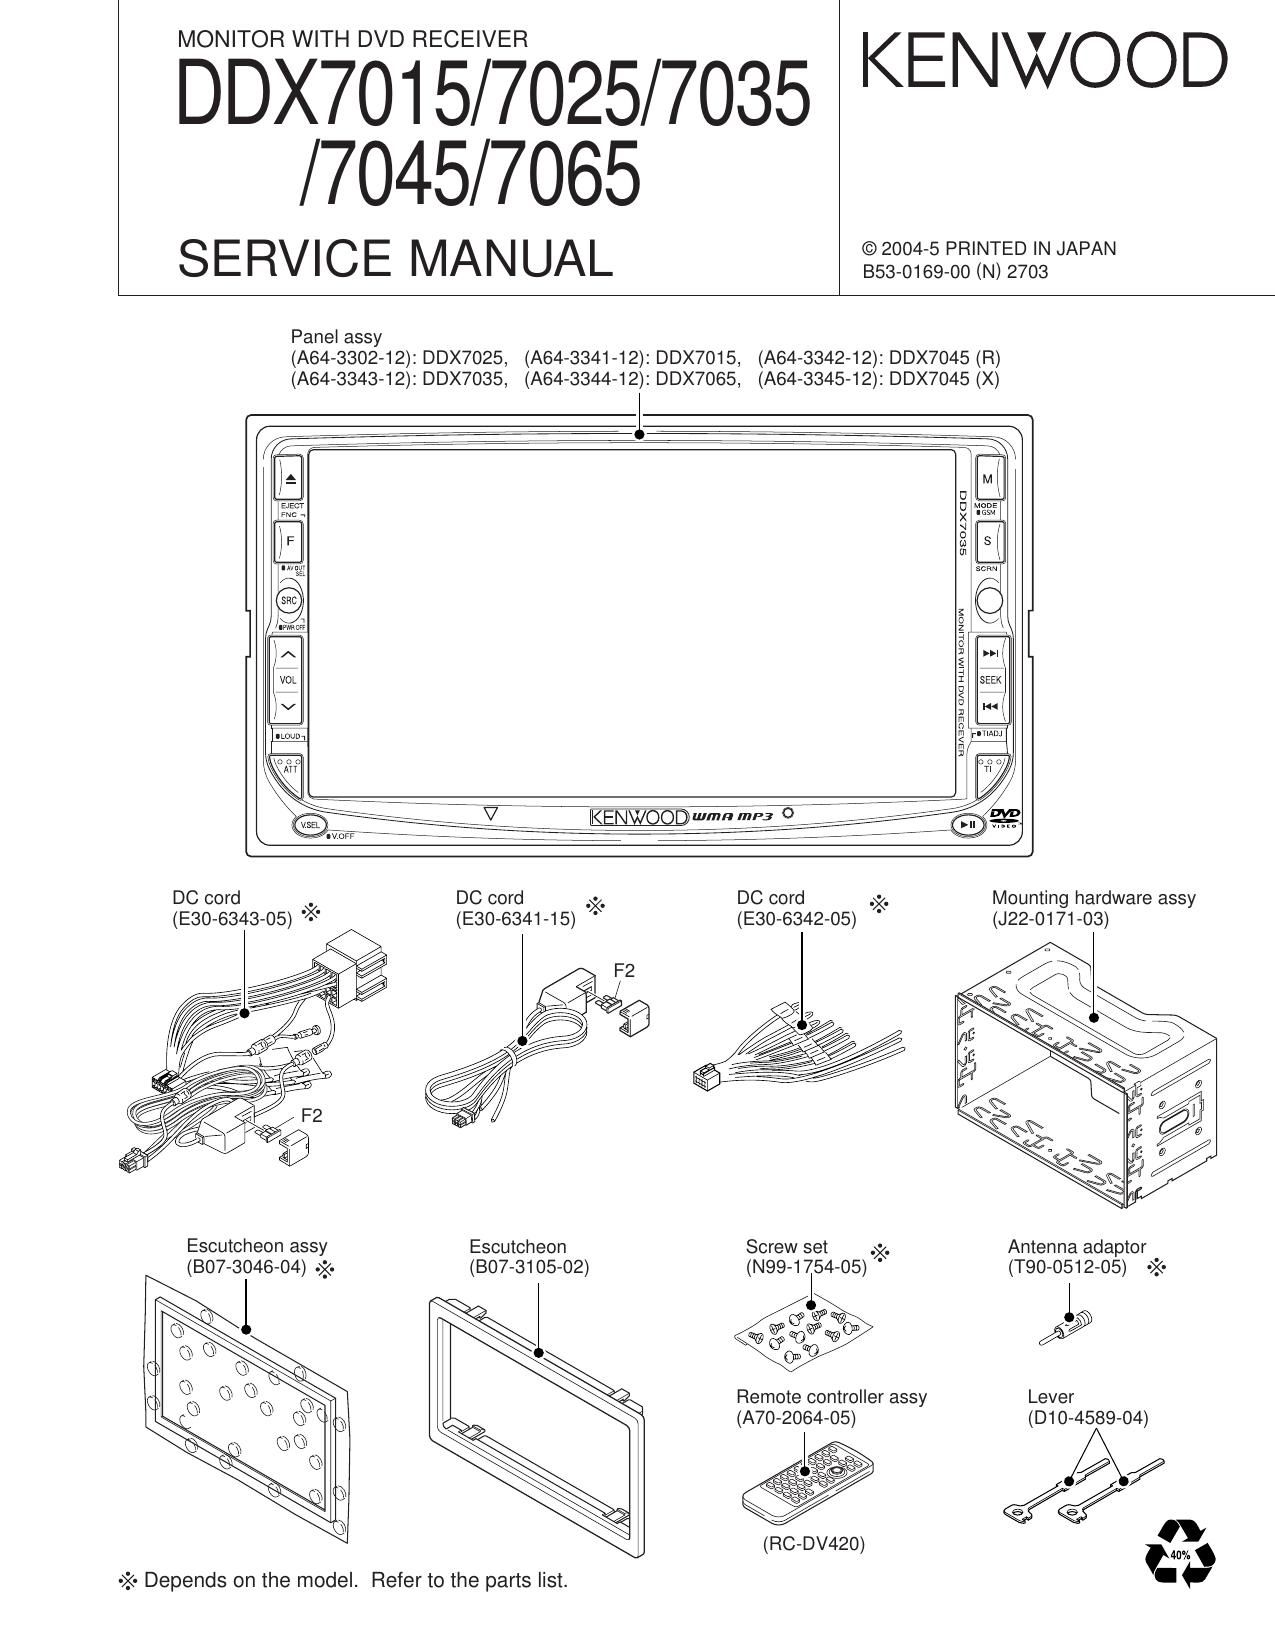 Kenwood DDX 7045 Service Manual